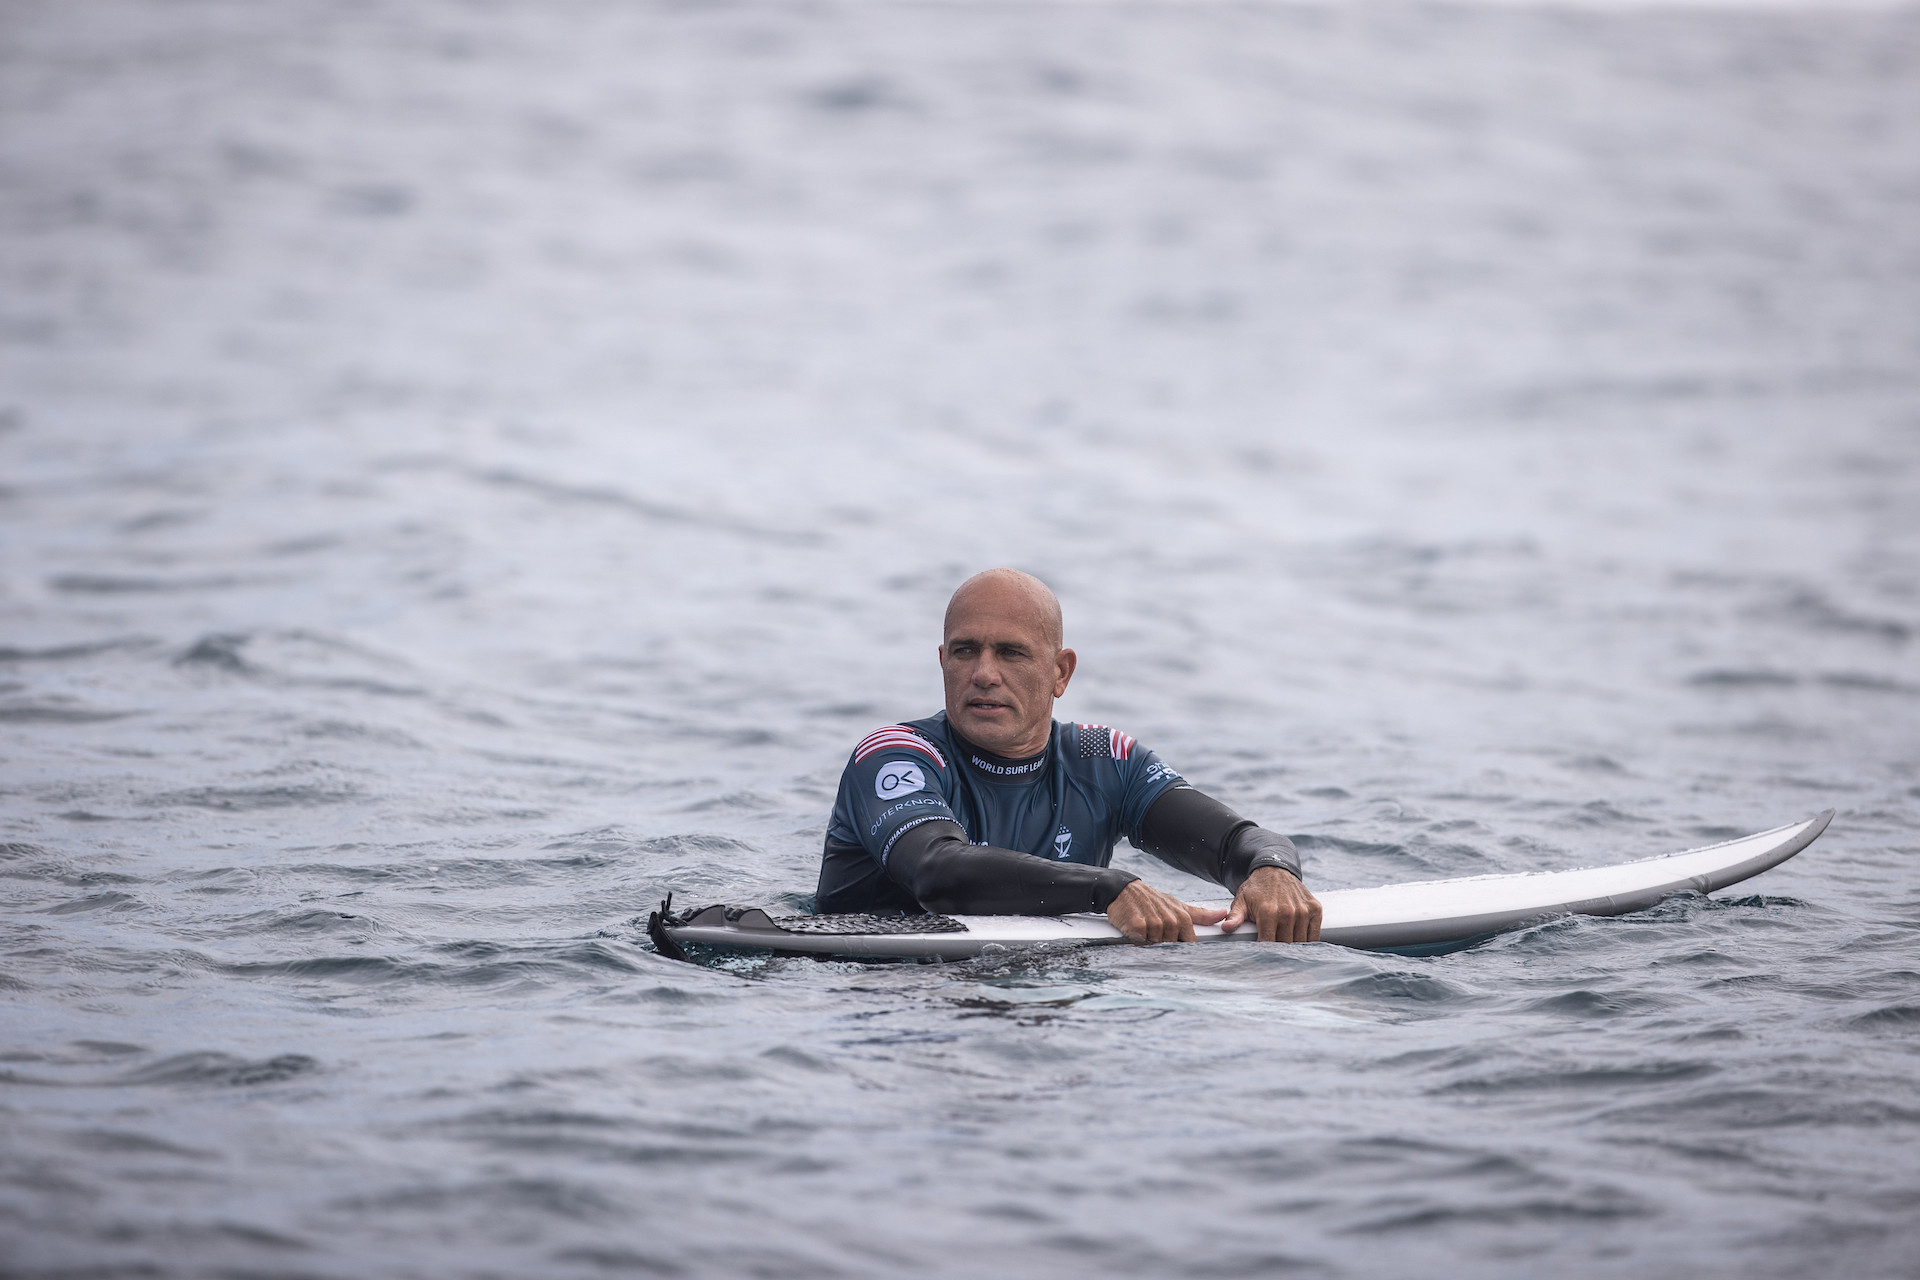 Surfing legend Slater, 52, "feels like the end"